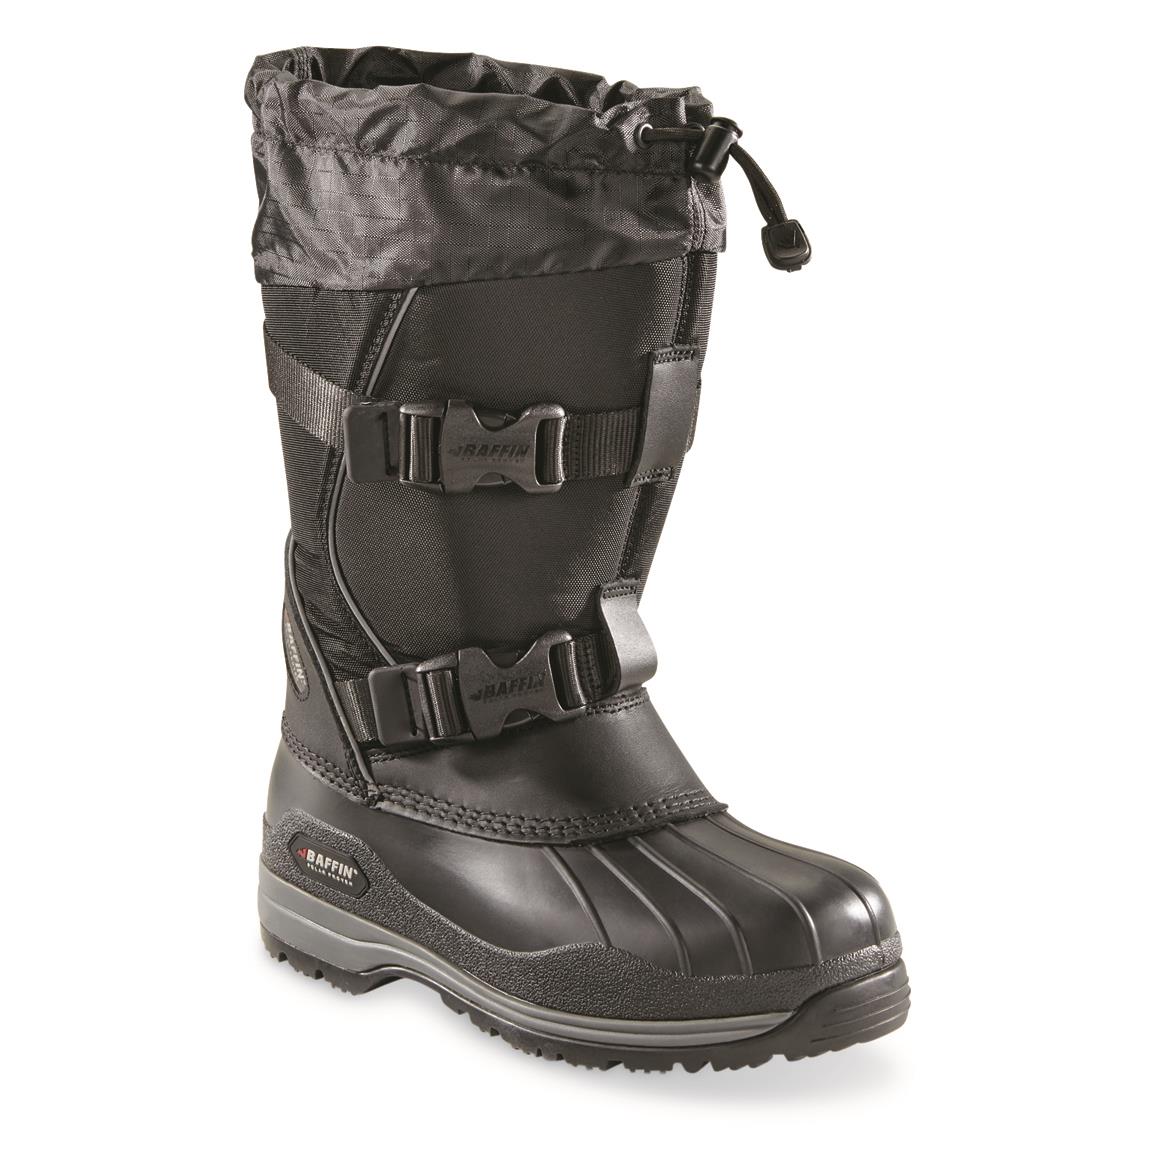 Baffin Women's Impact Polar Waterproof Insulated Boots, Black